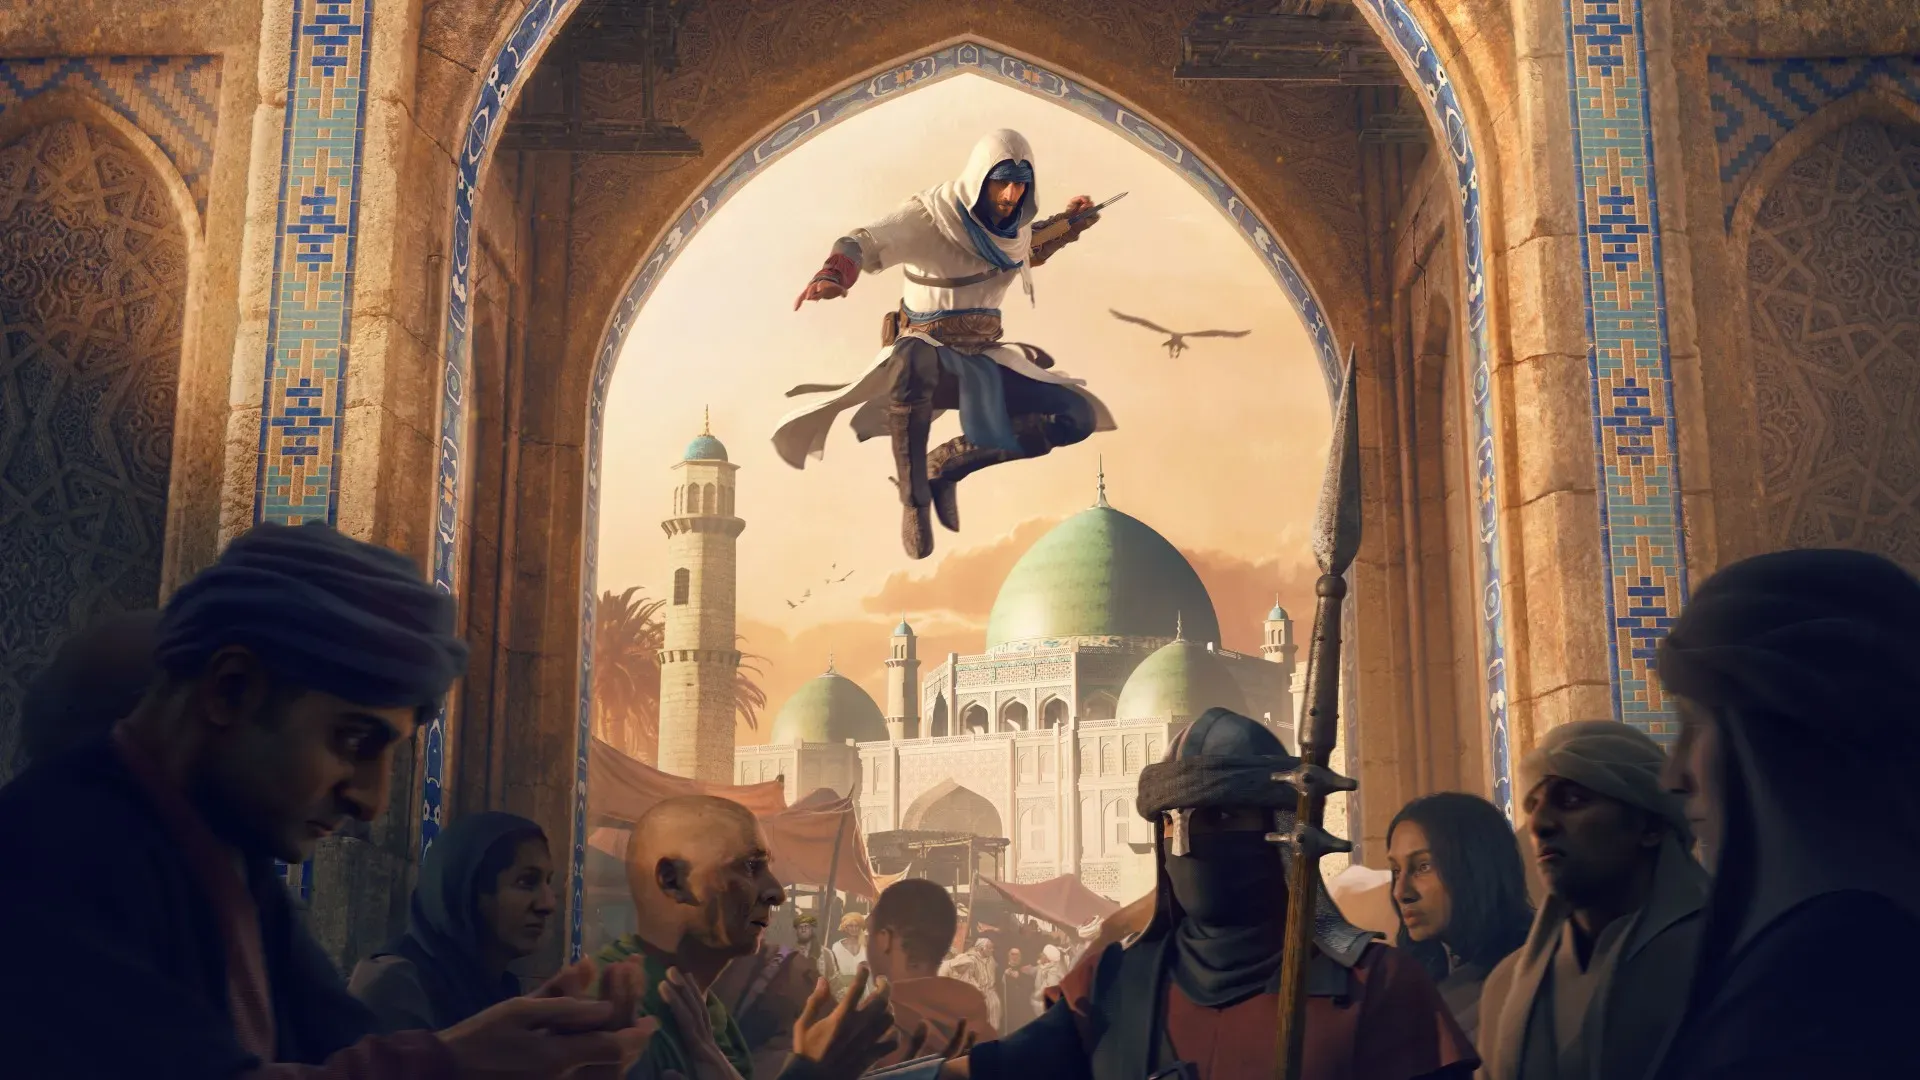 Assassin's Creed: Revelations DLC Achievements